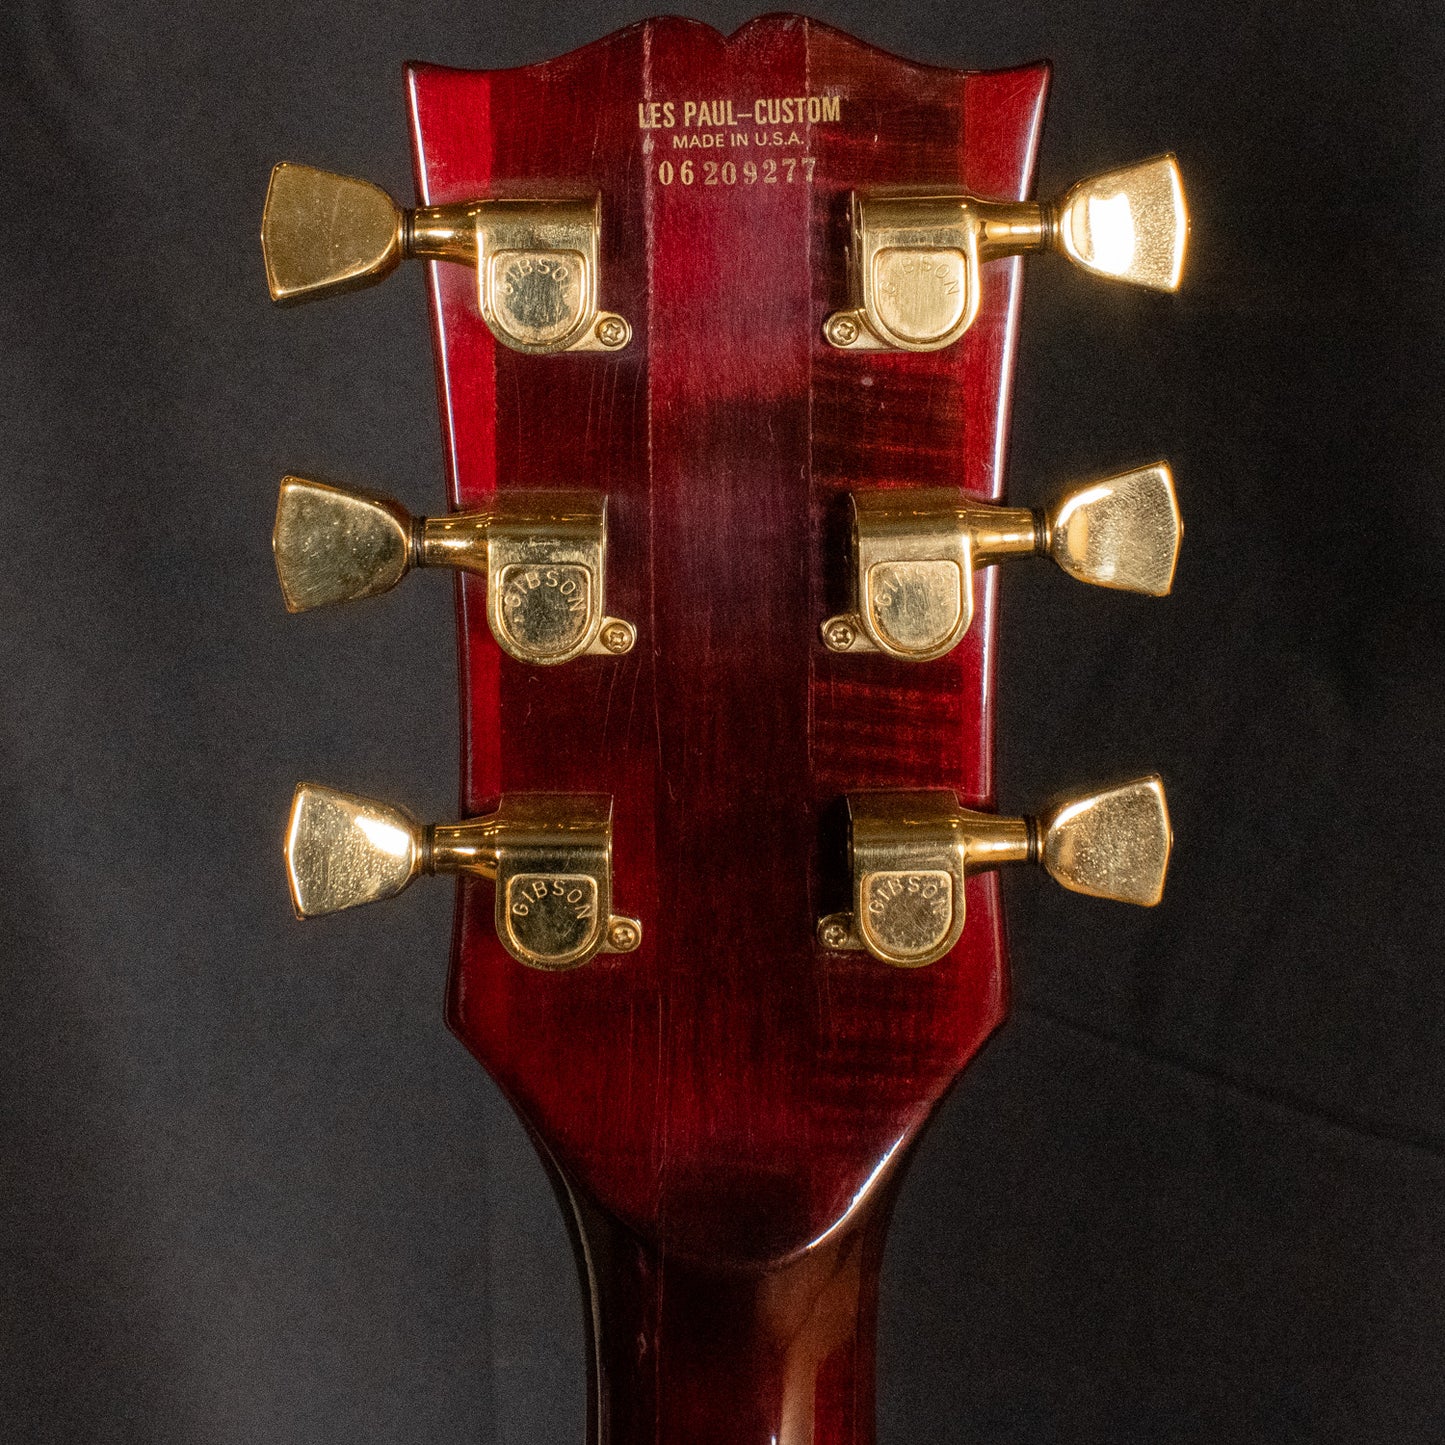 1977 Gibson Les Paul Custom